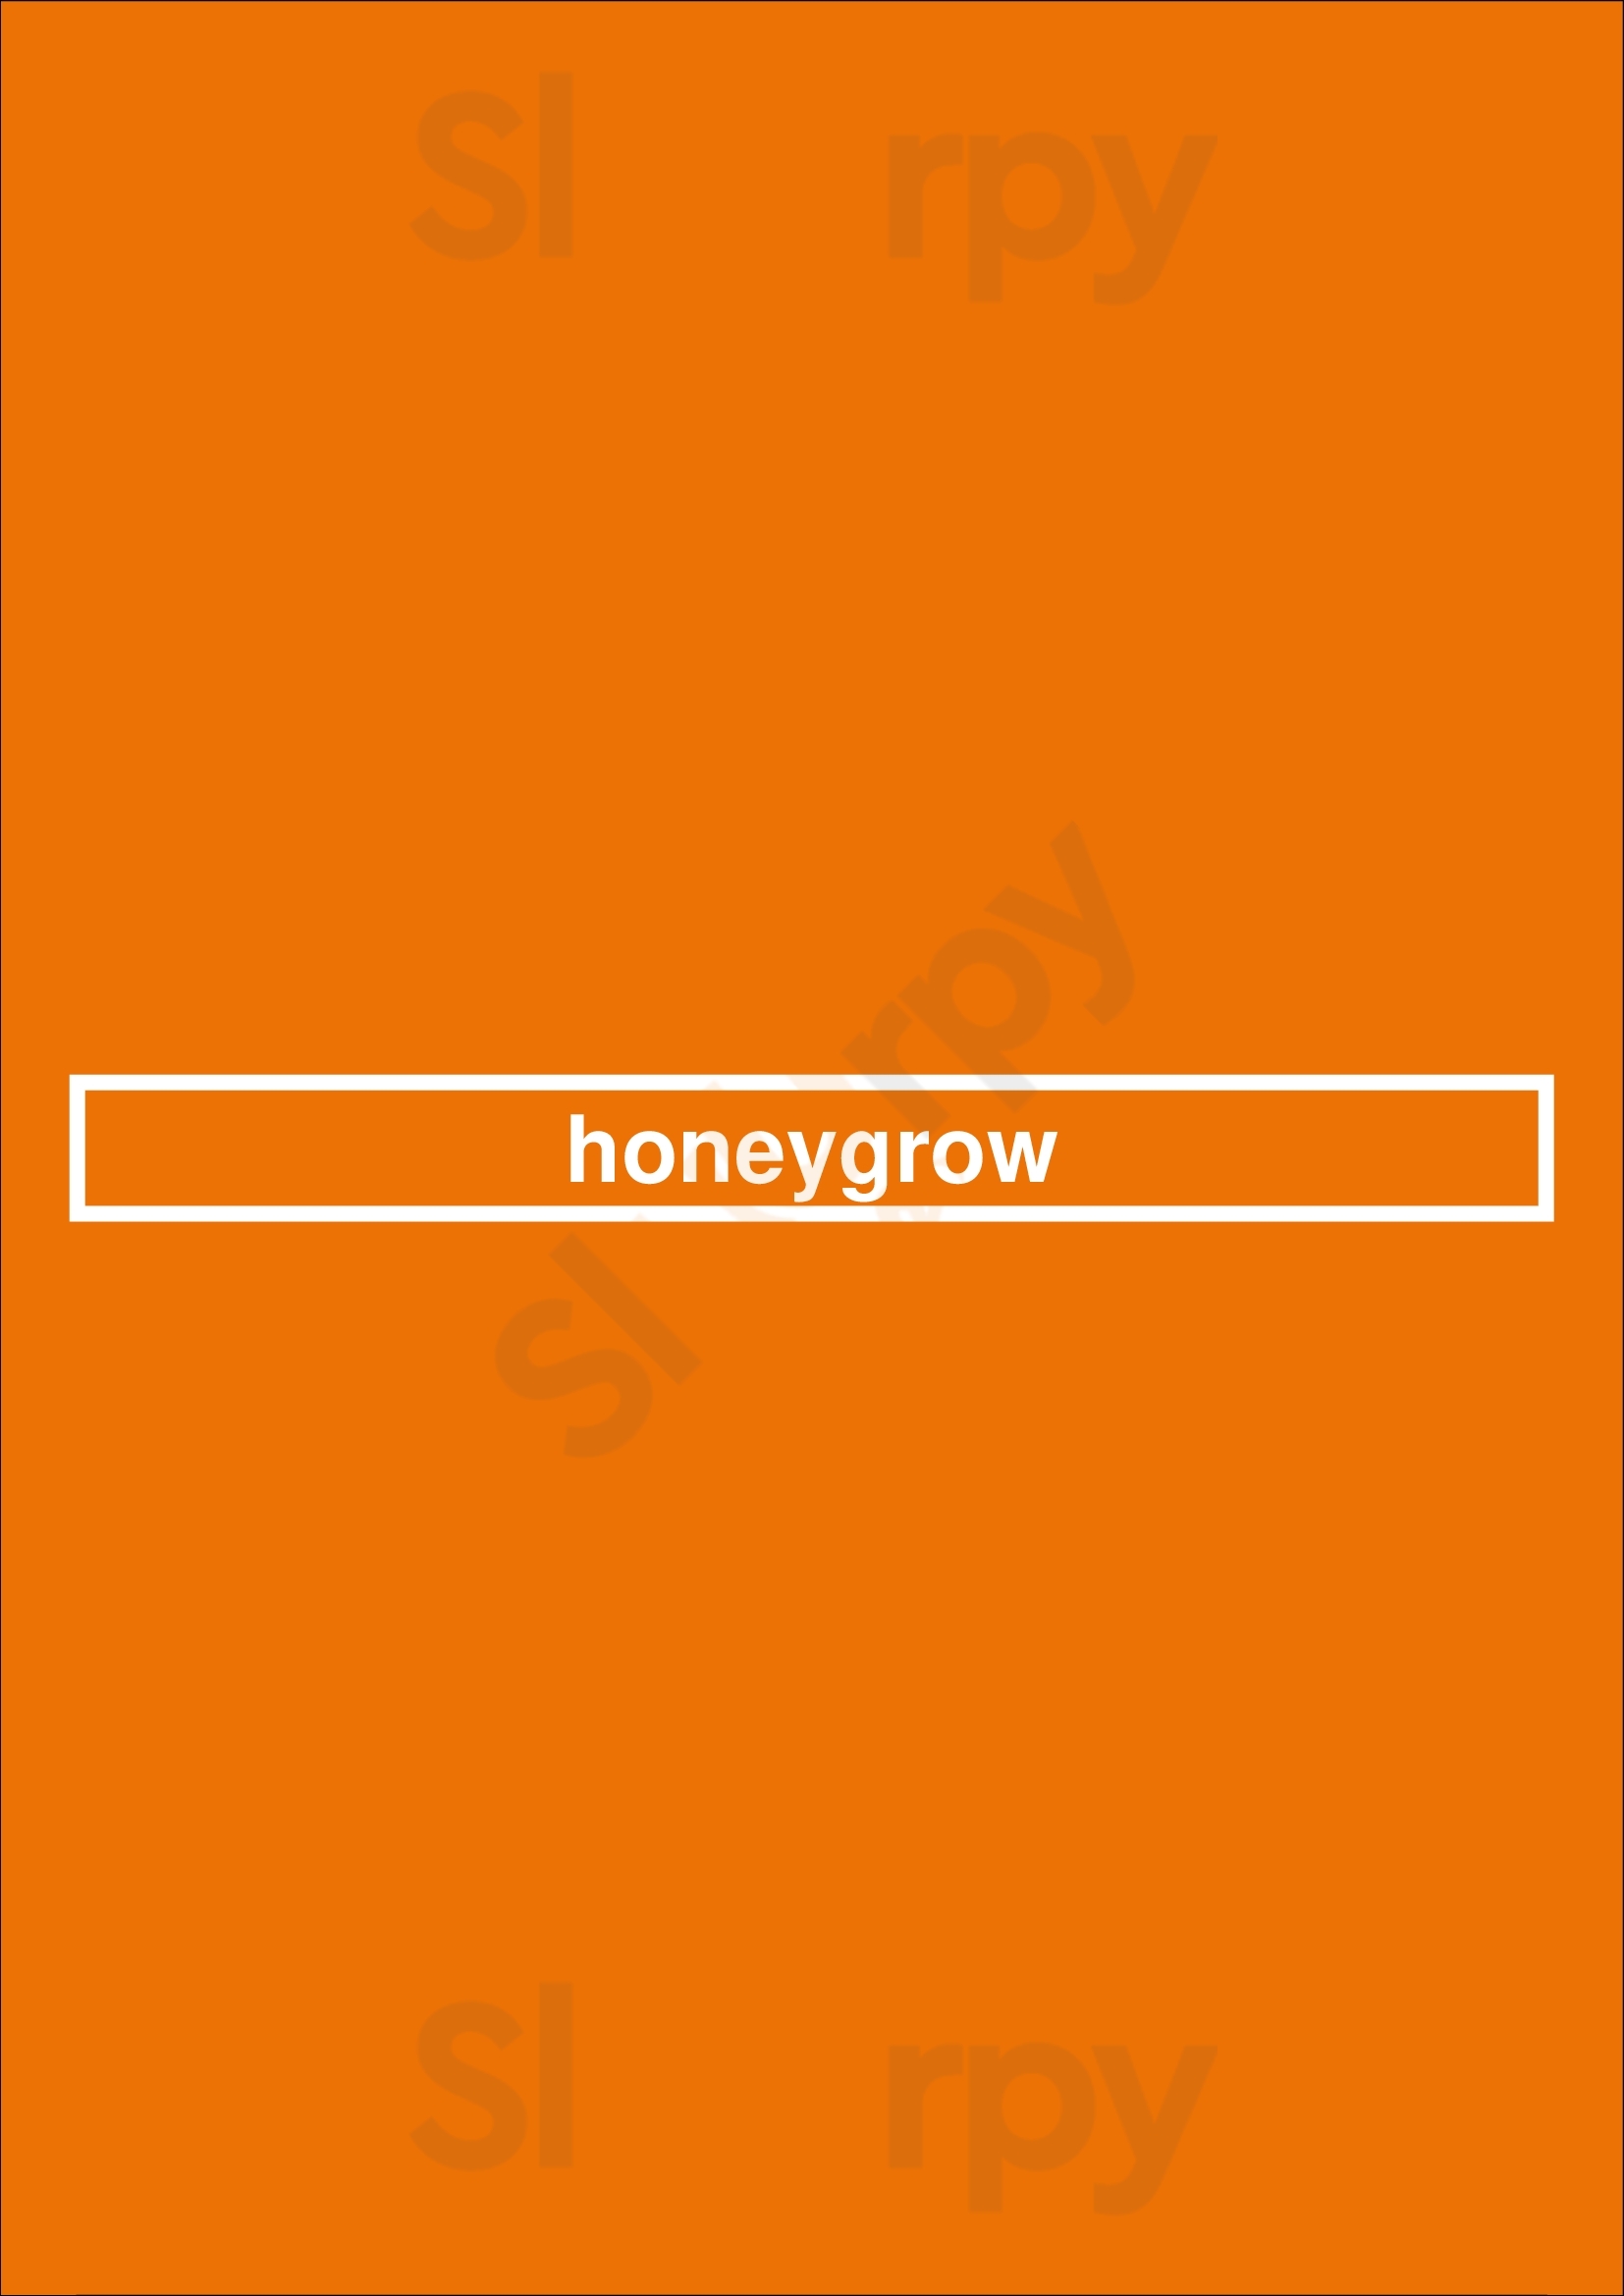 Honeygrow Boston Menu - 1